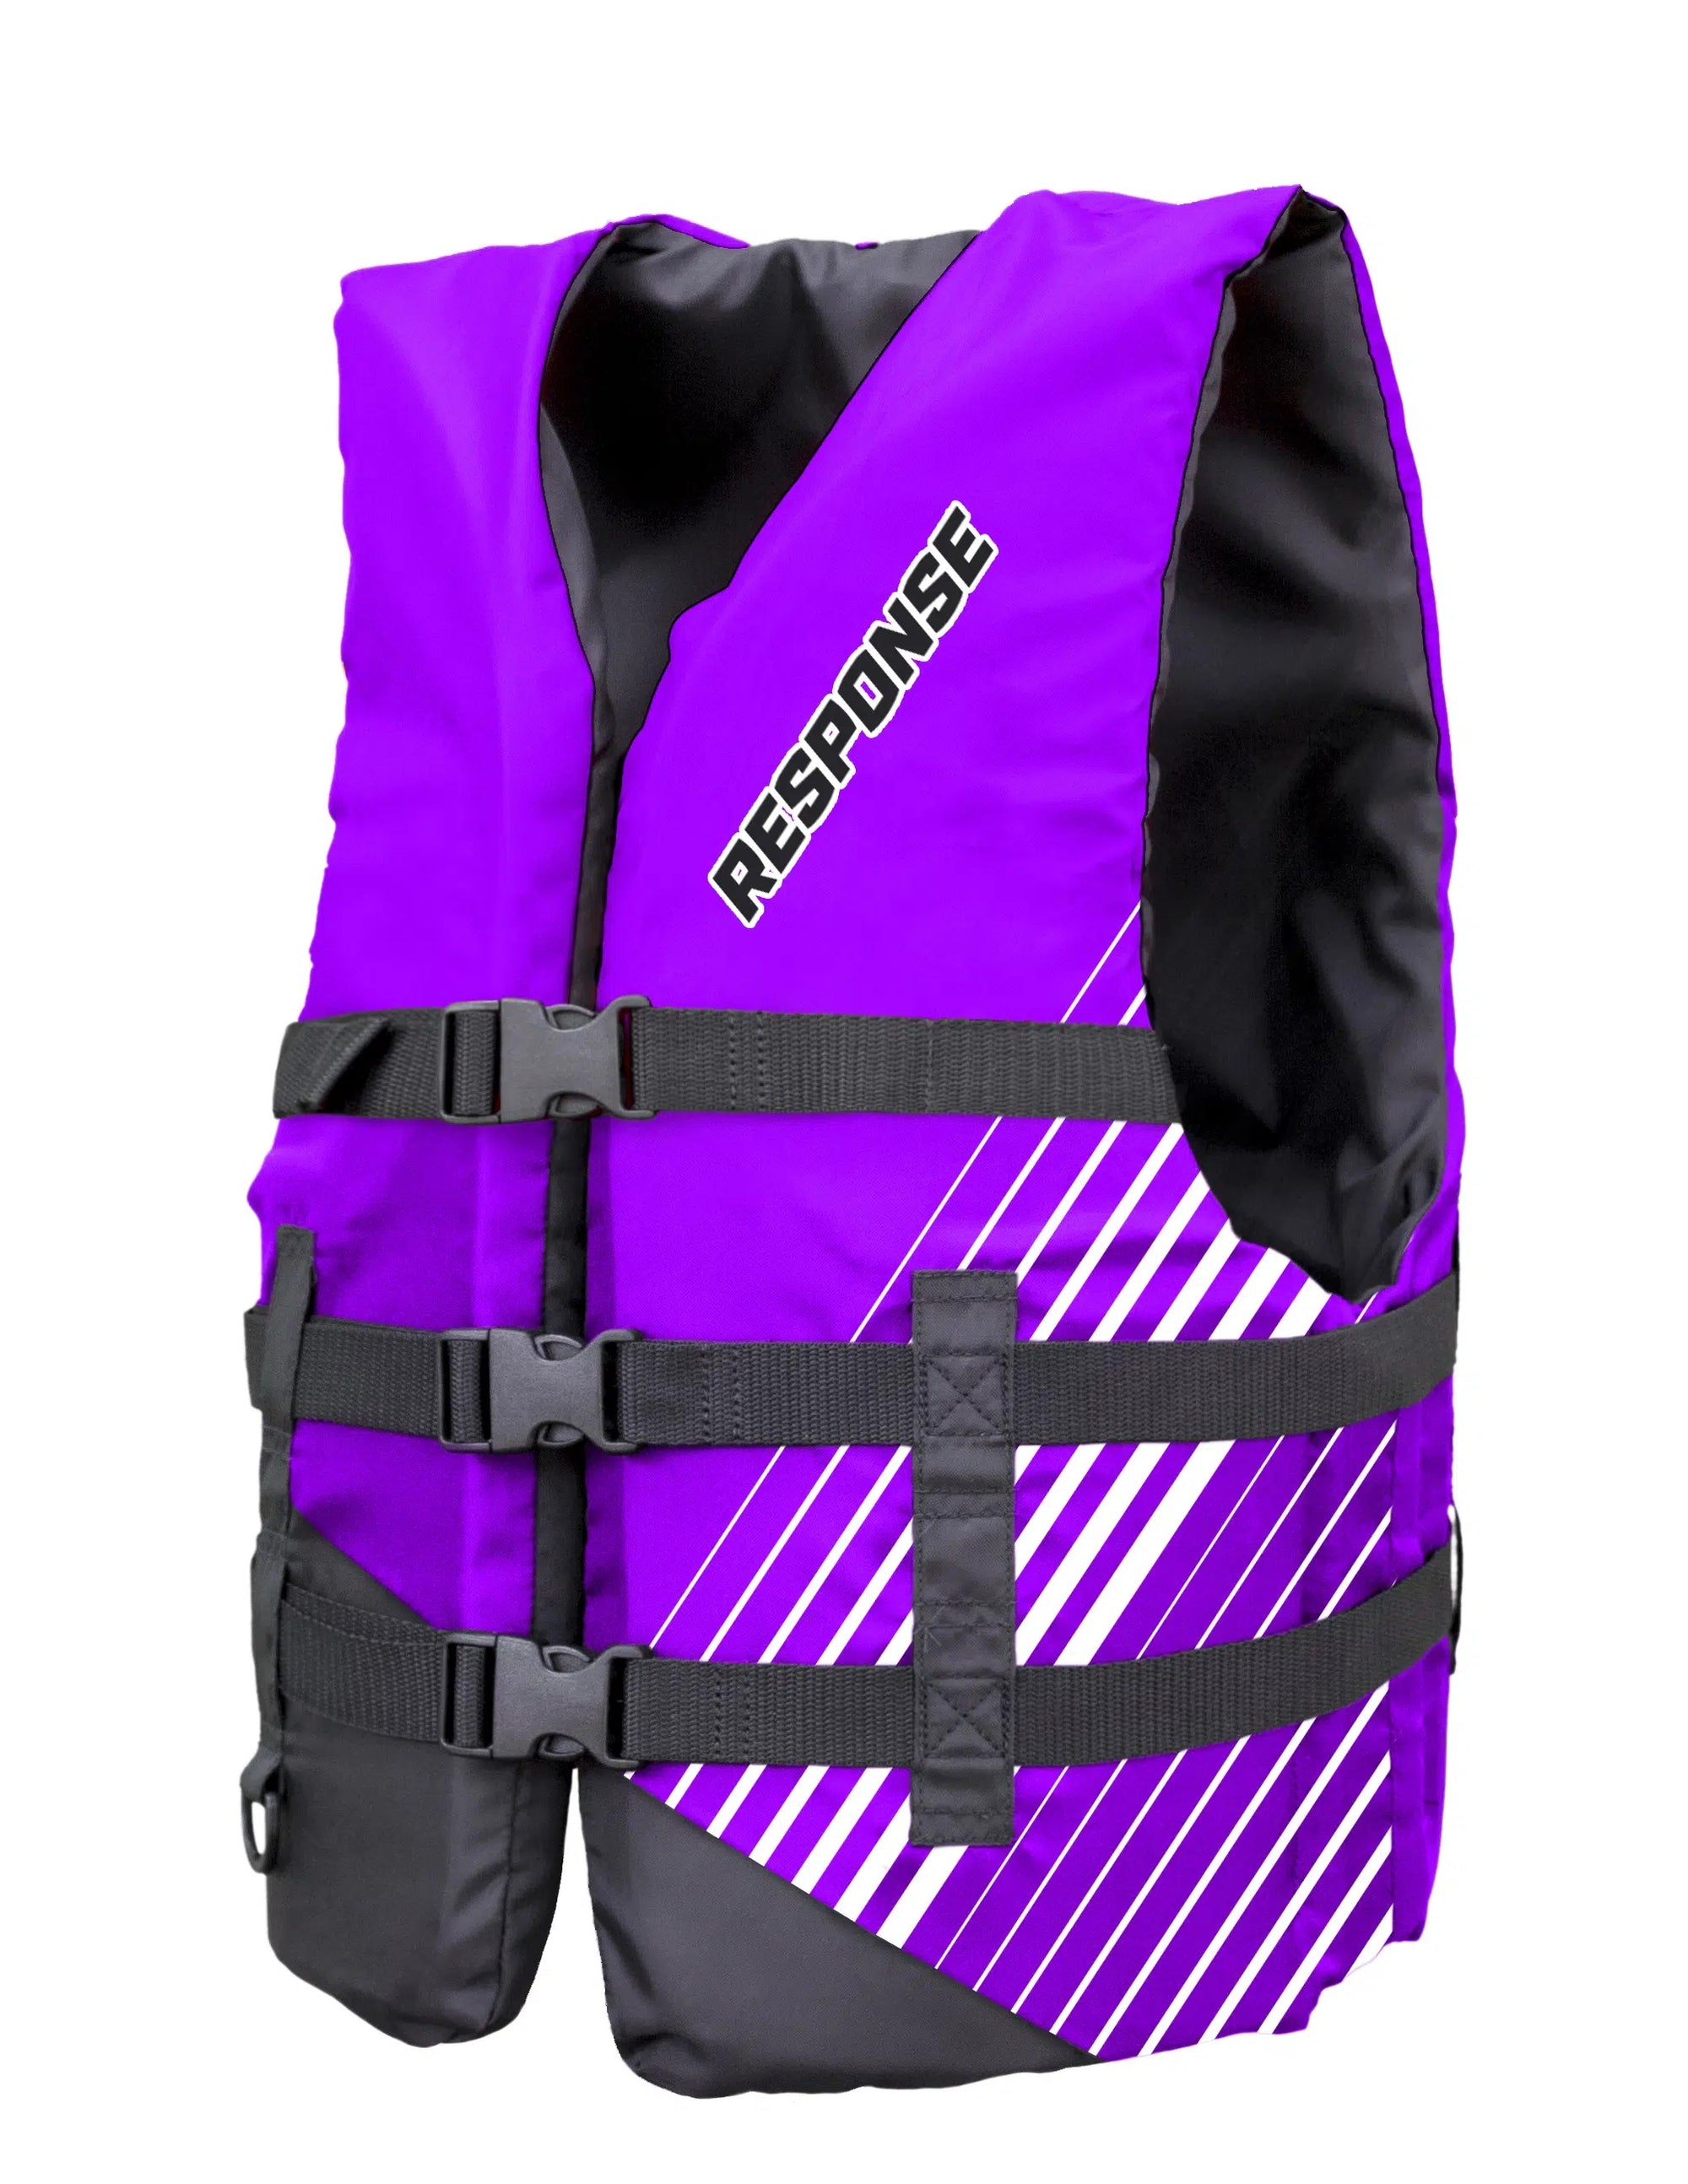 Response Youth Child Kids Children Life Jacket PFD Vest L50S Purple